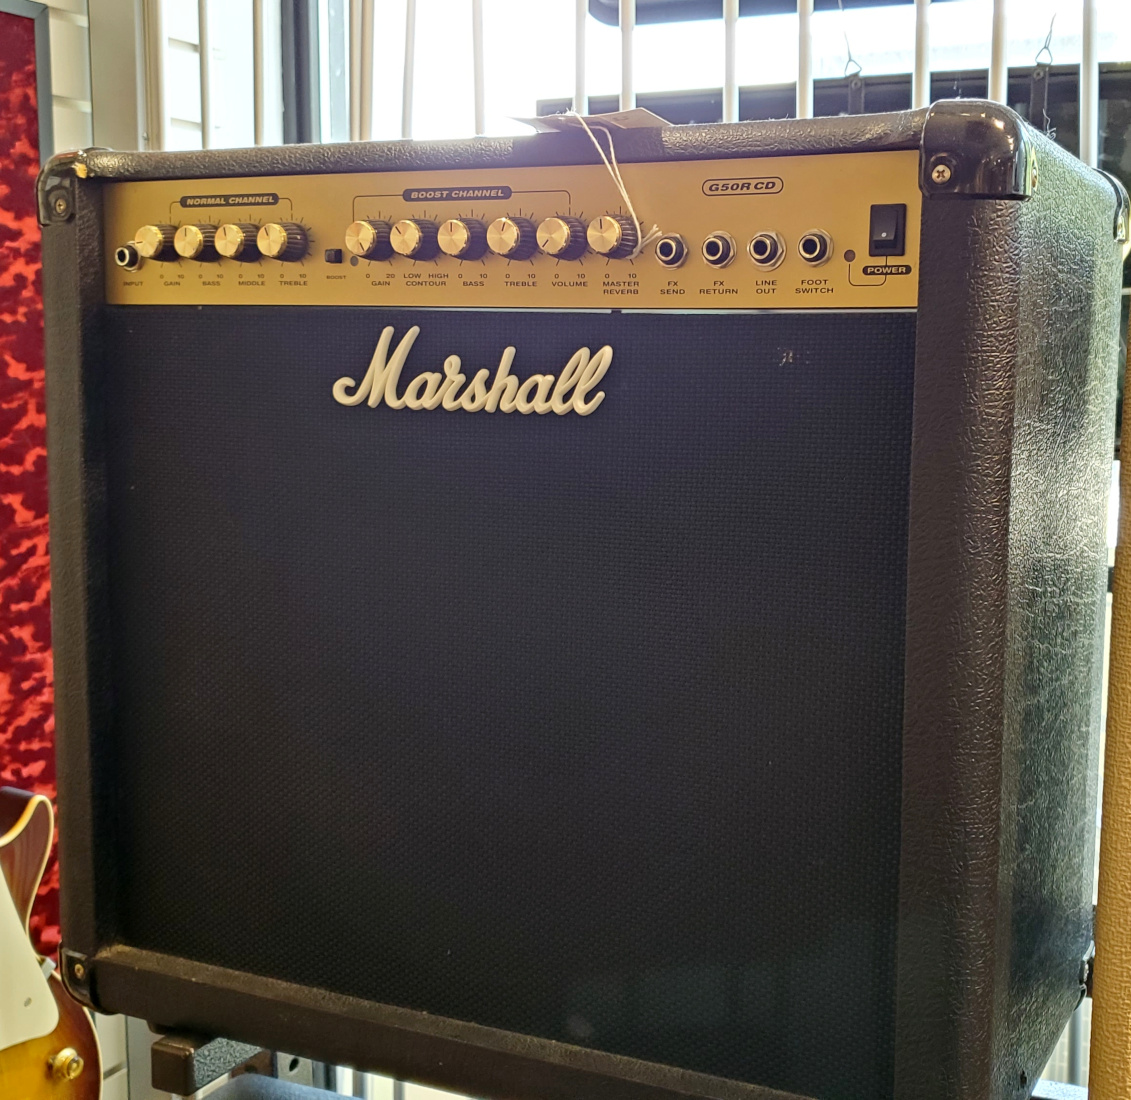 USED Marshall G50R CD Amplifier